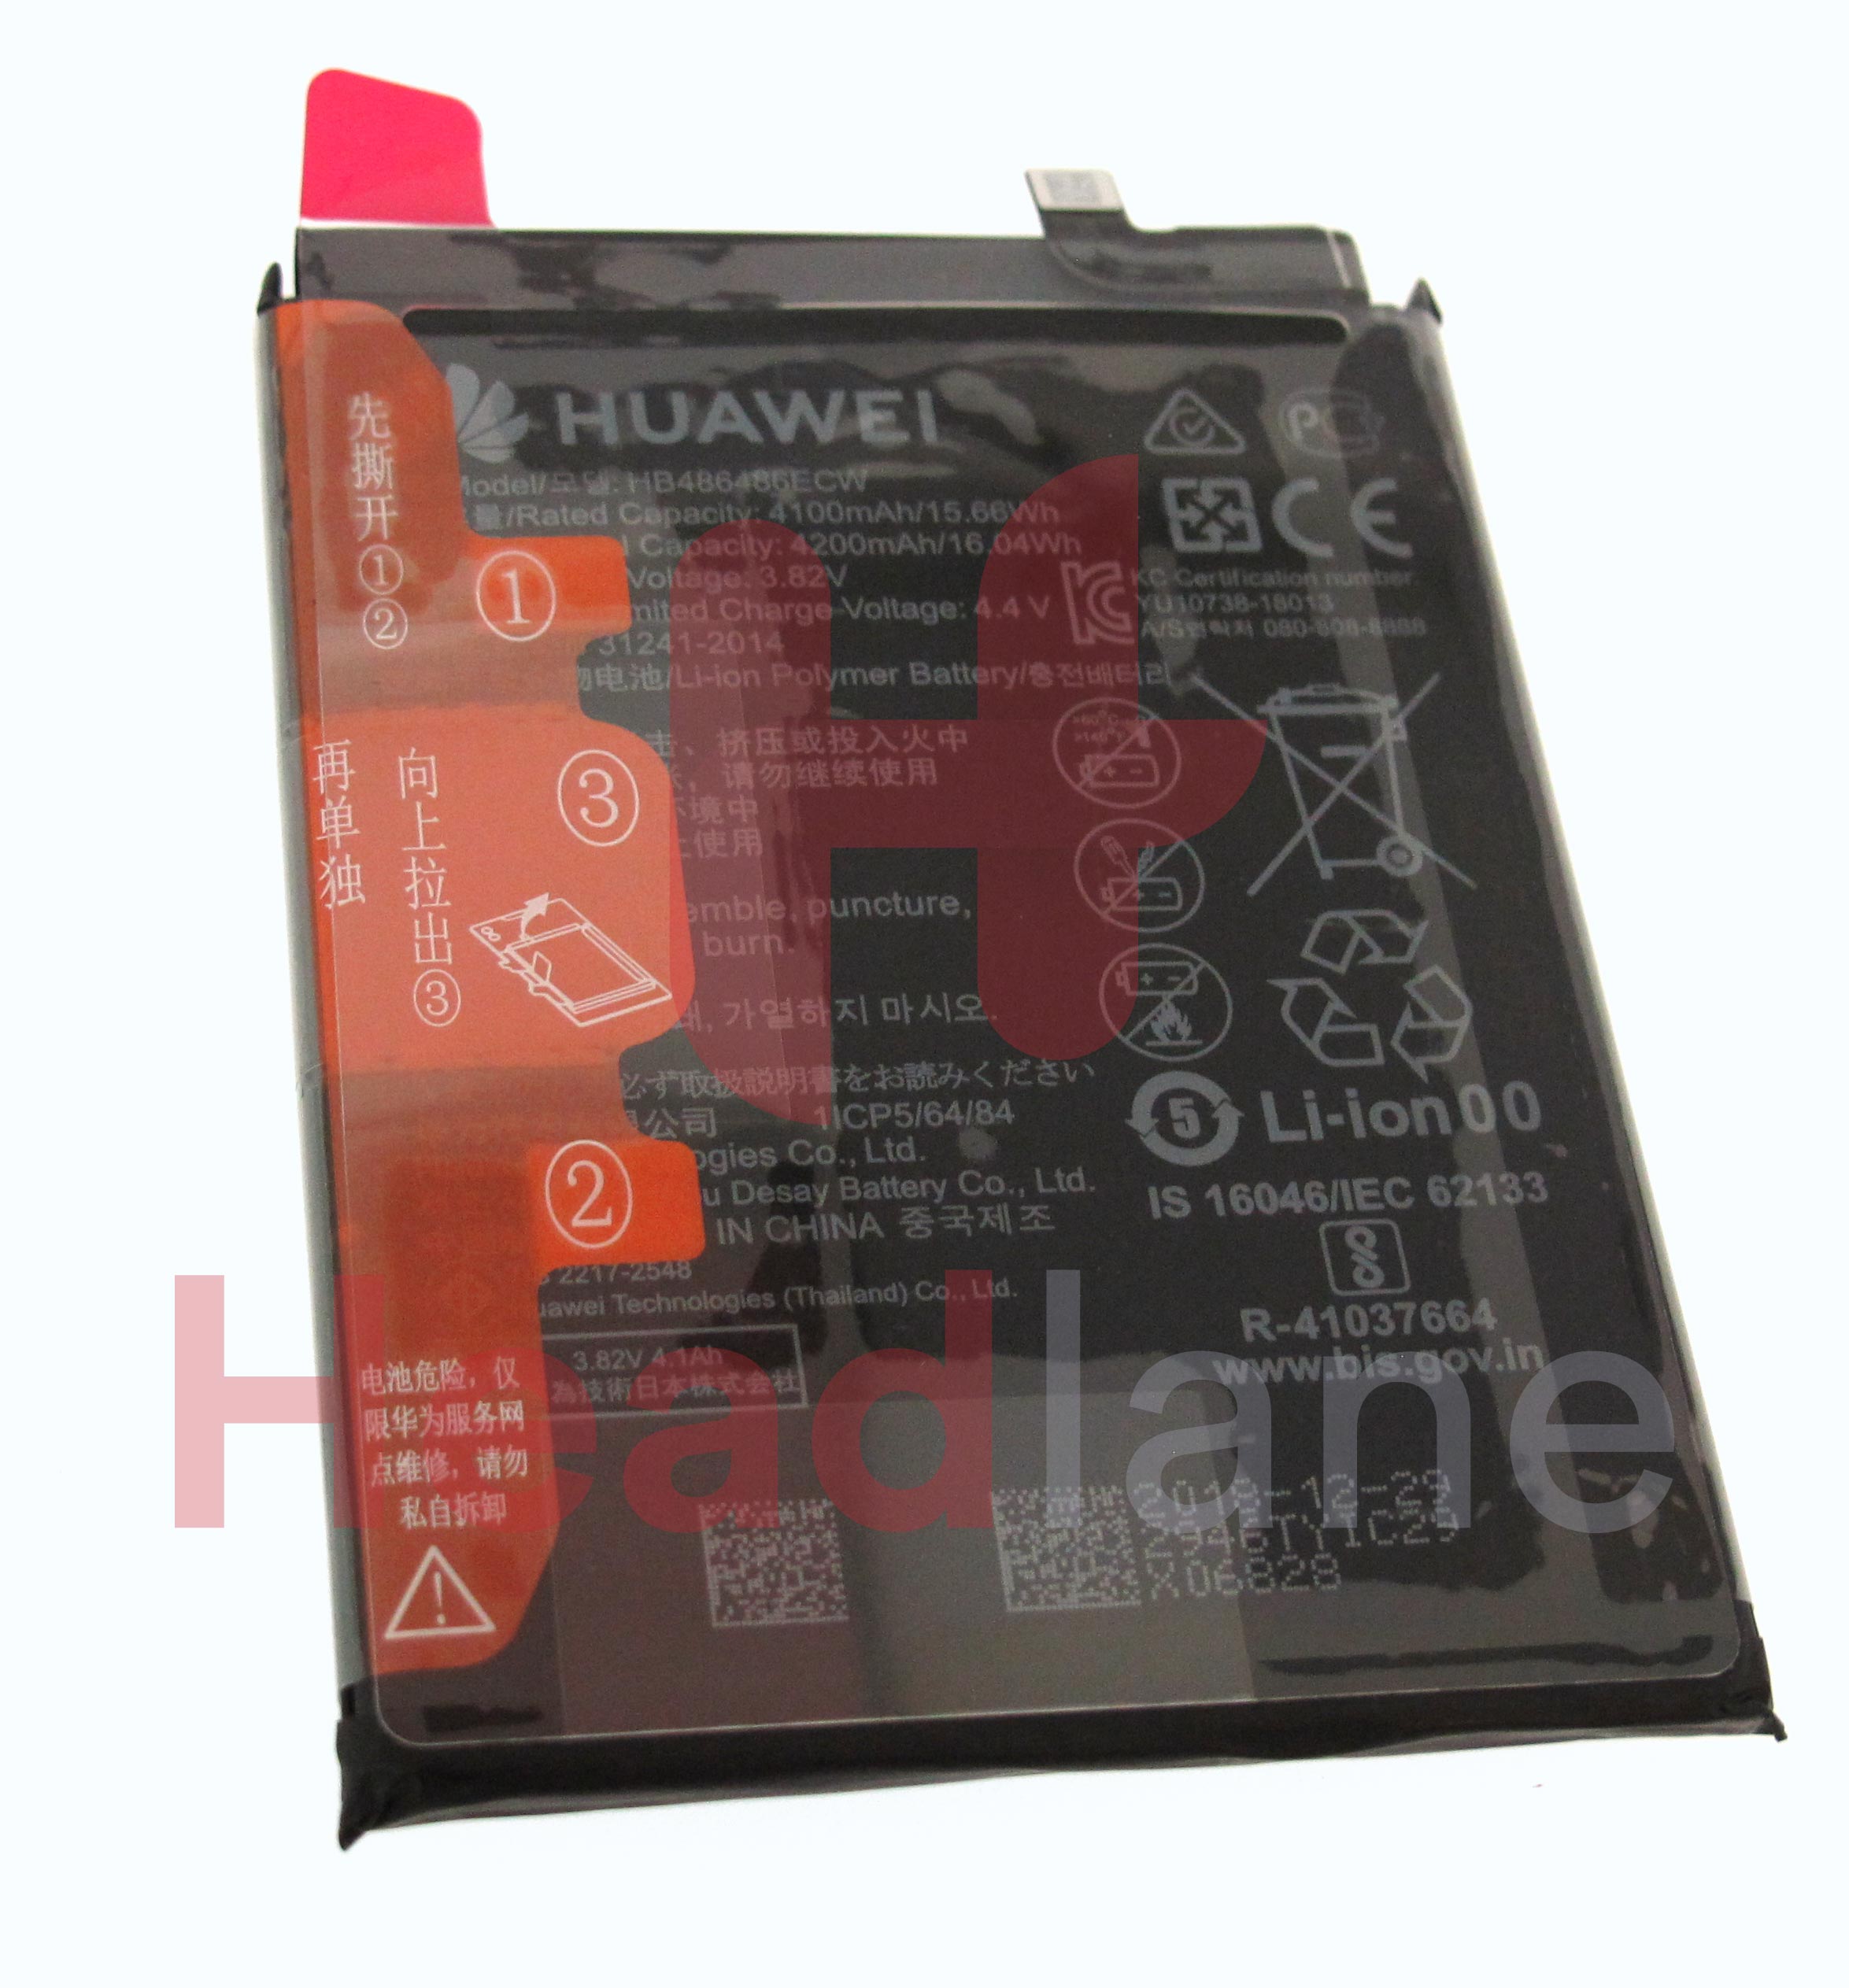 Huawei P30 Pro Internal Battery